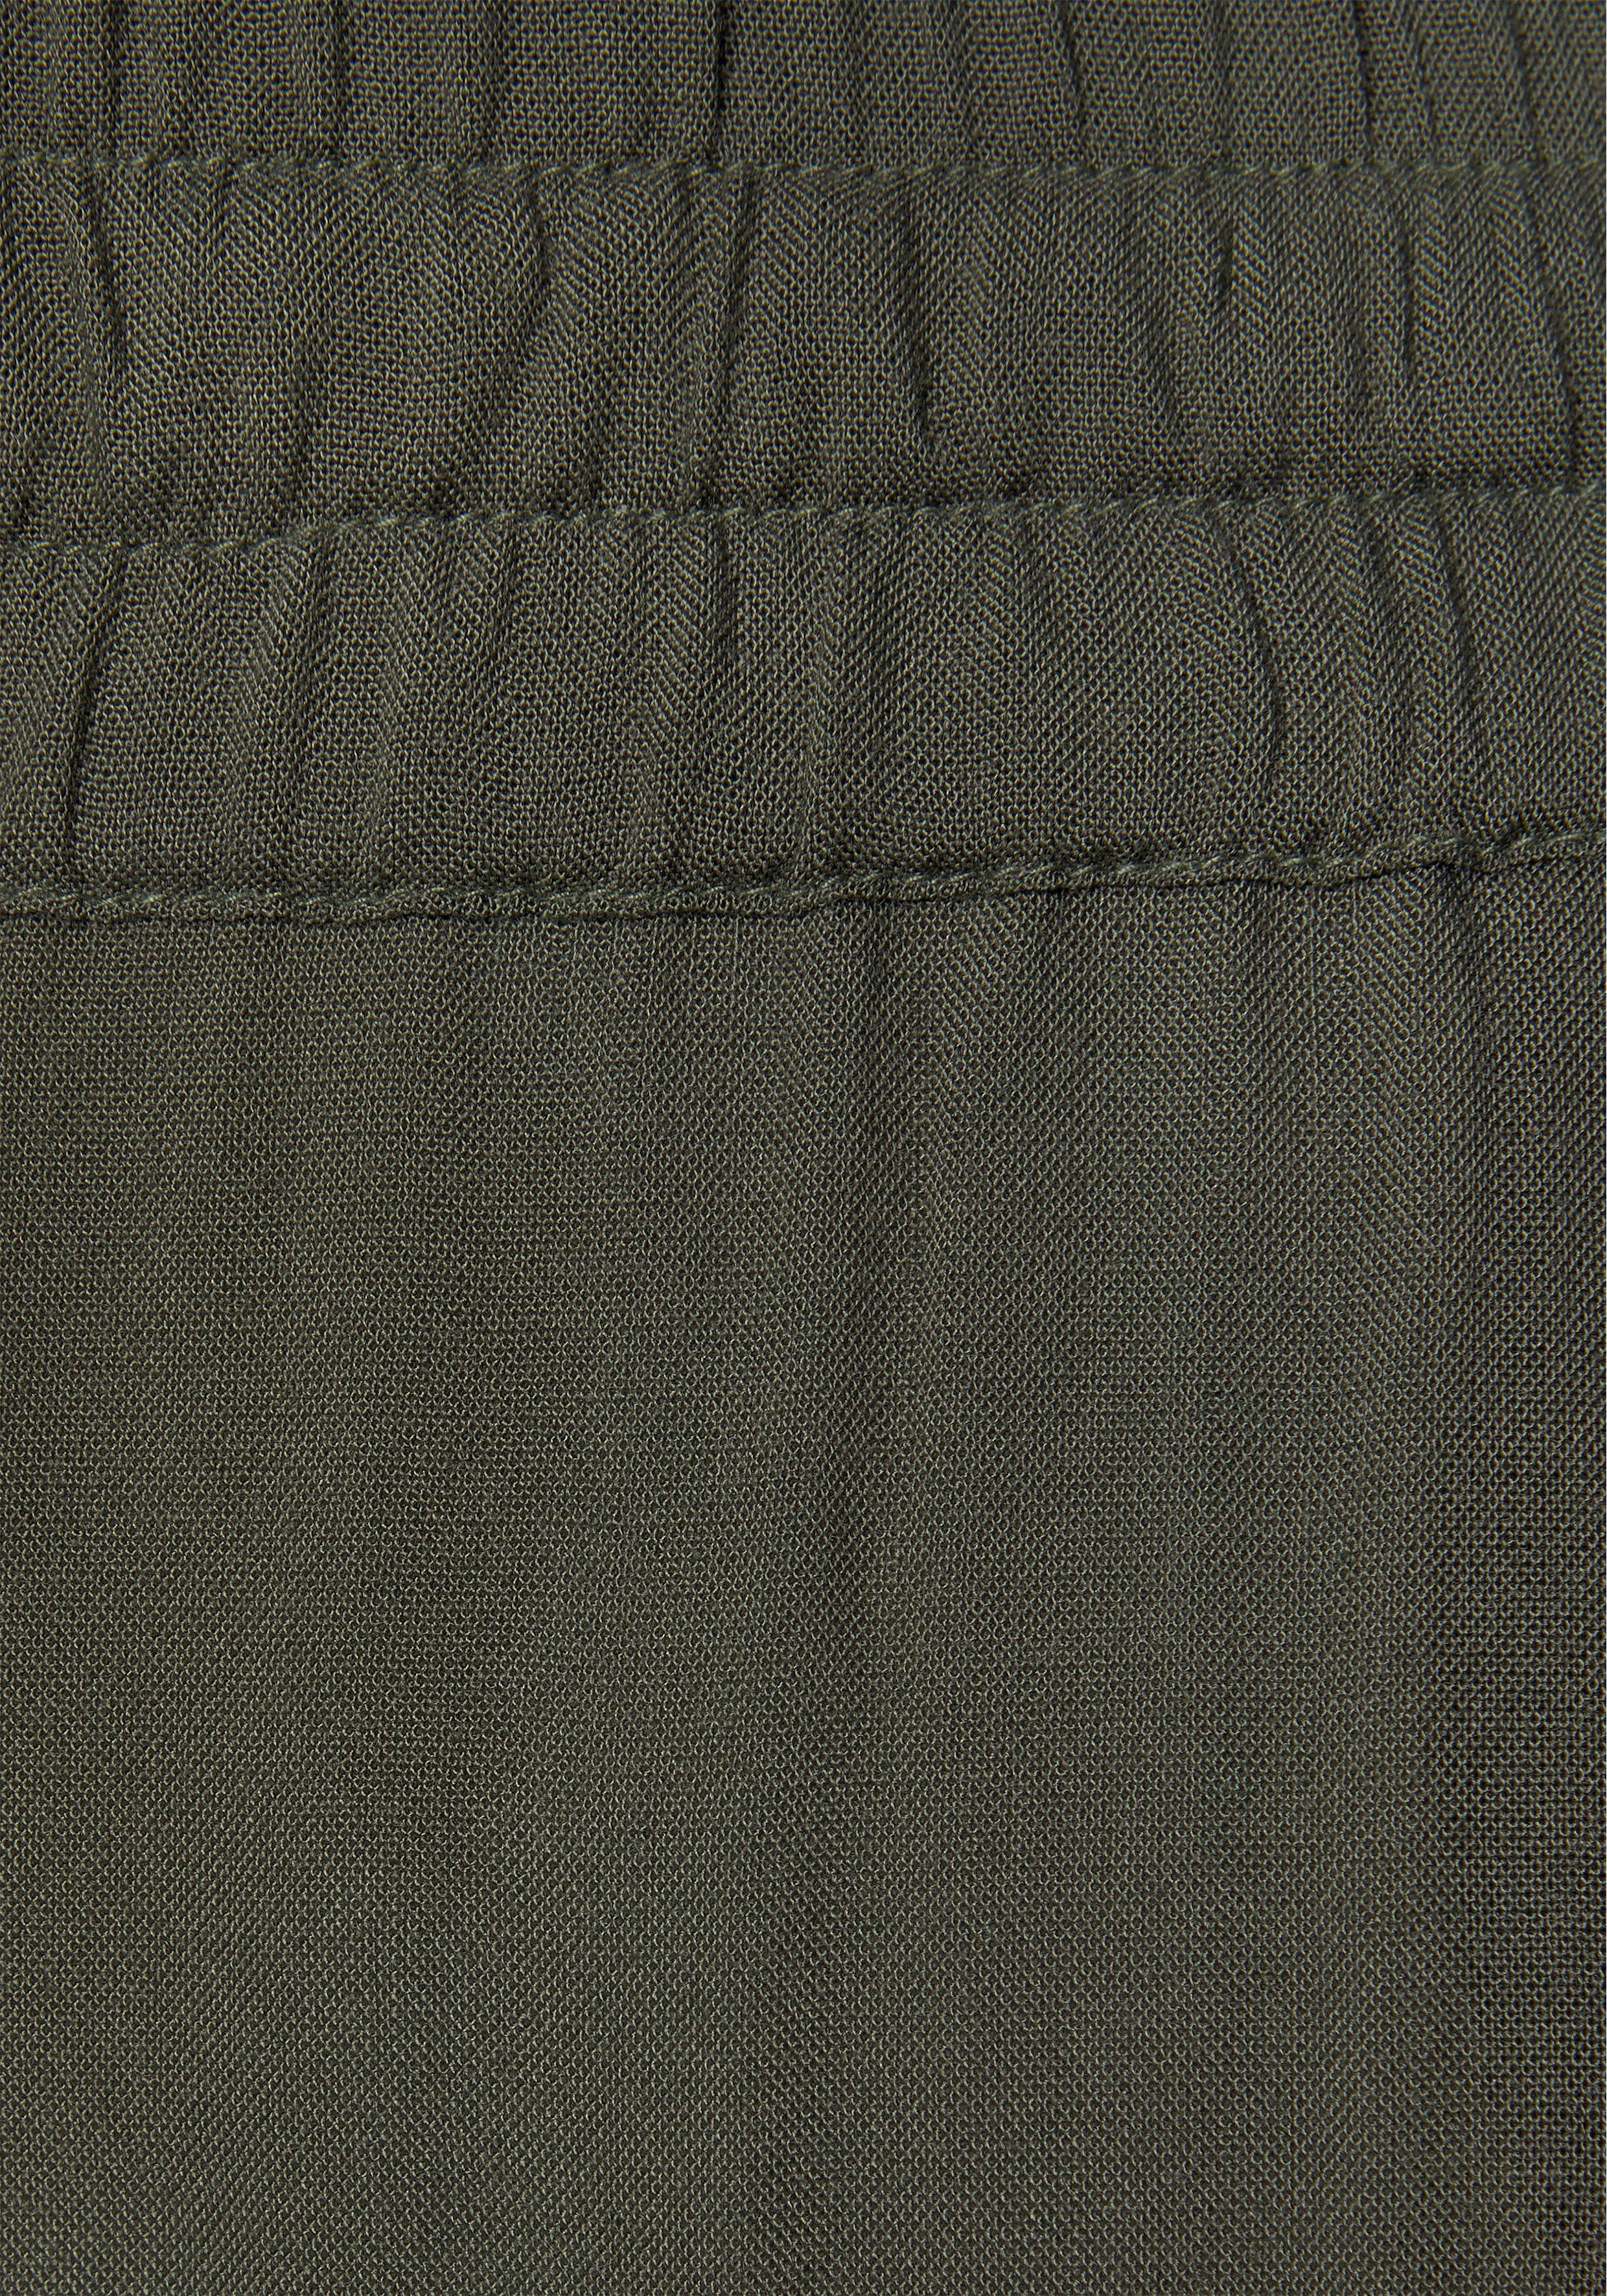 Schlupfhose Viskose, LASCANA Business-Look gewebter schmaler khaki Sommerhose, aus Schnitt,